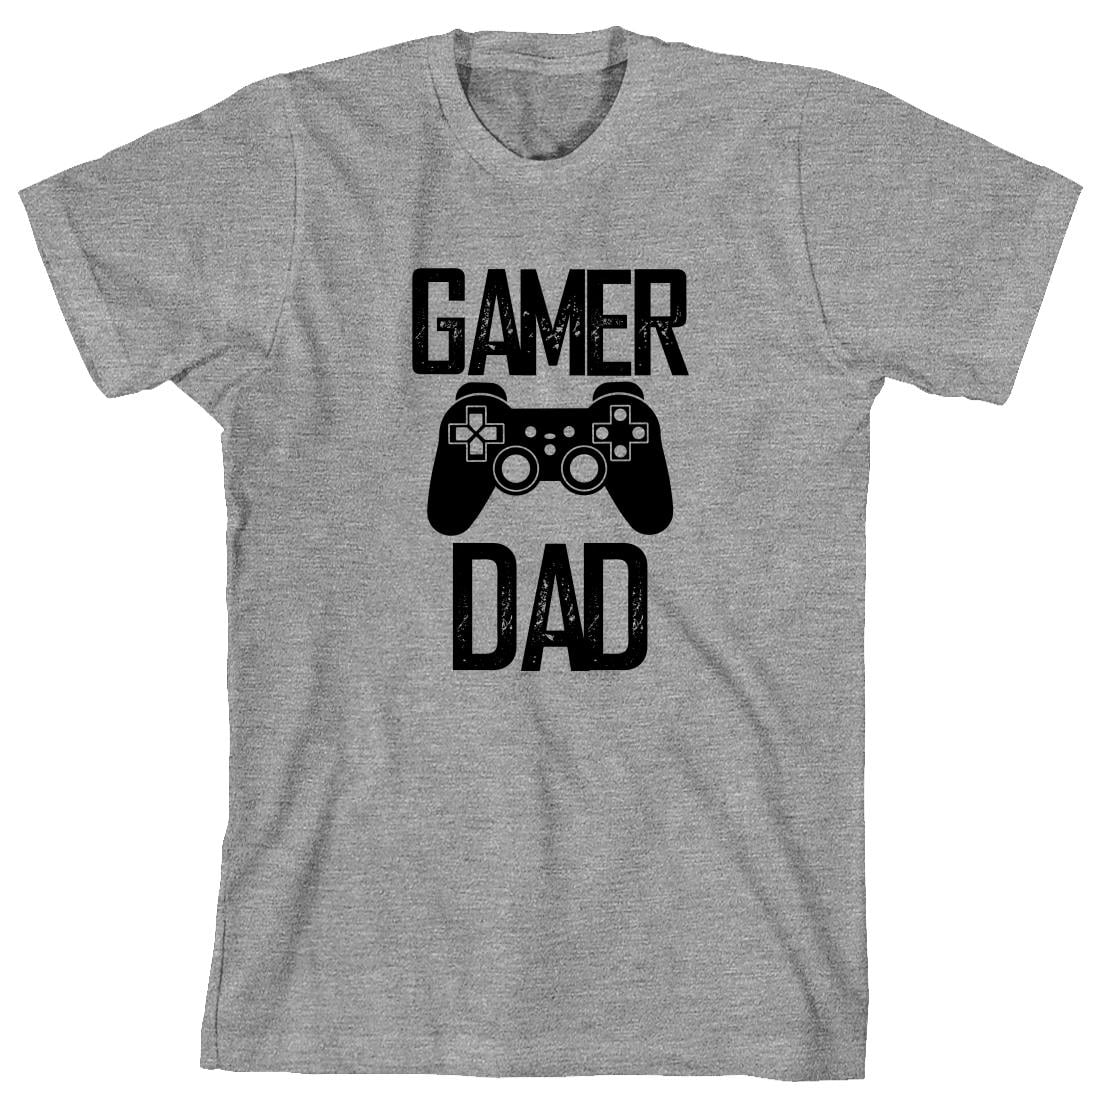 Uncensored Shirts - Gamer Dad Men's Shirt - ID: 711 - Walmart.com ...